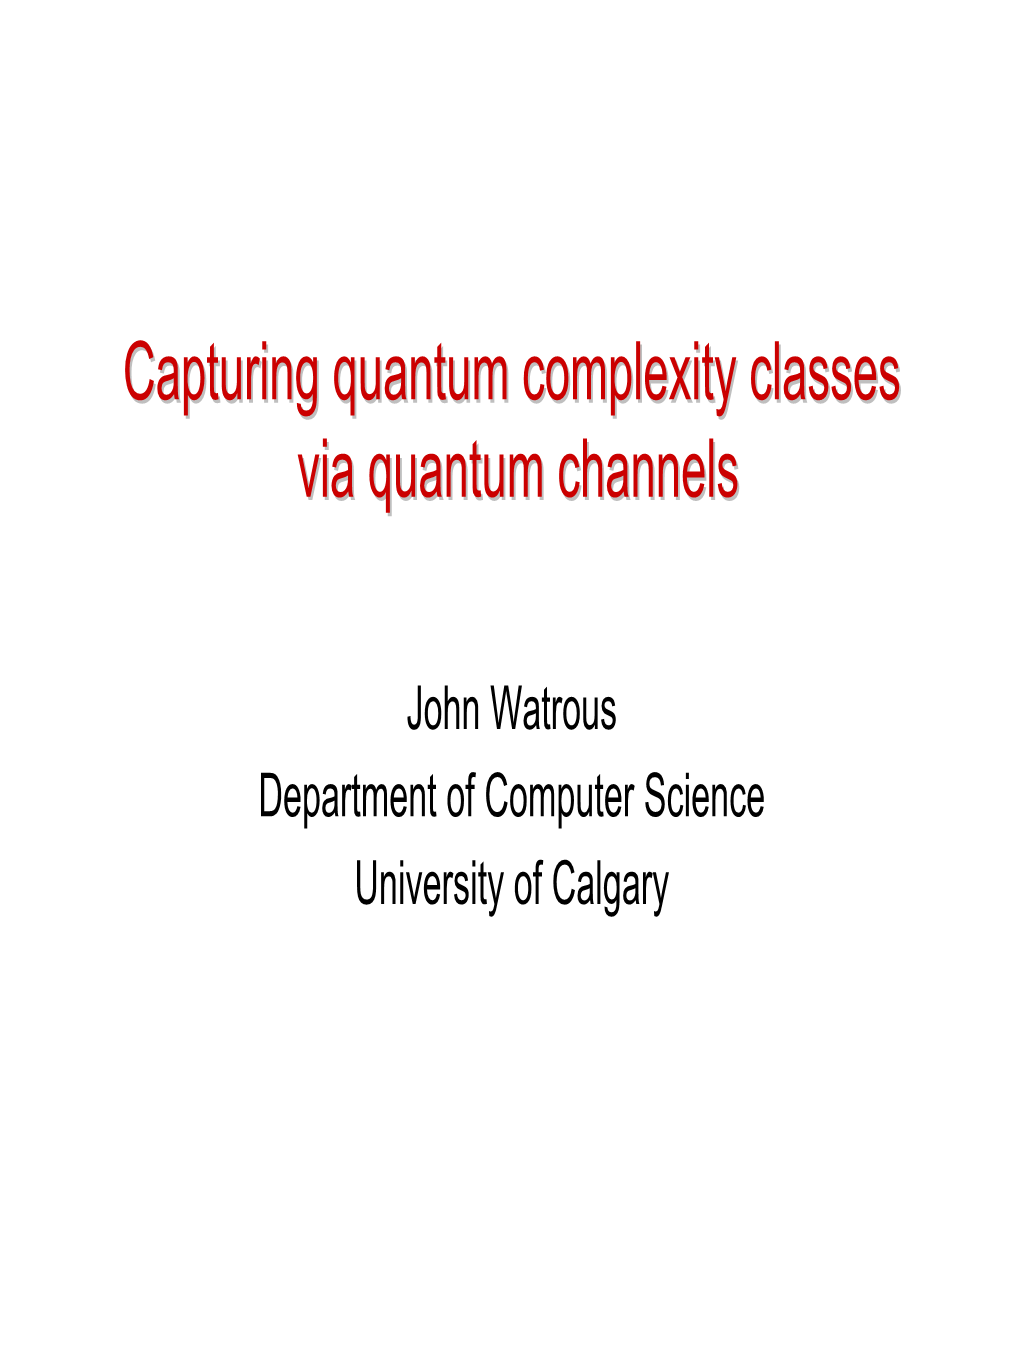 Capturing Quantum Complexity Classes Via Quantum Channels